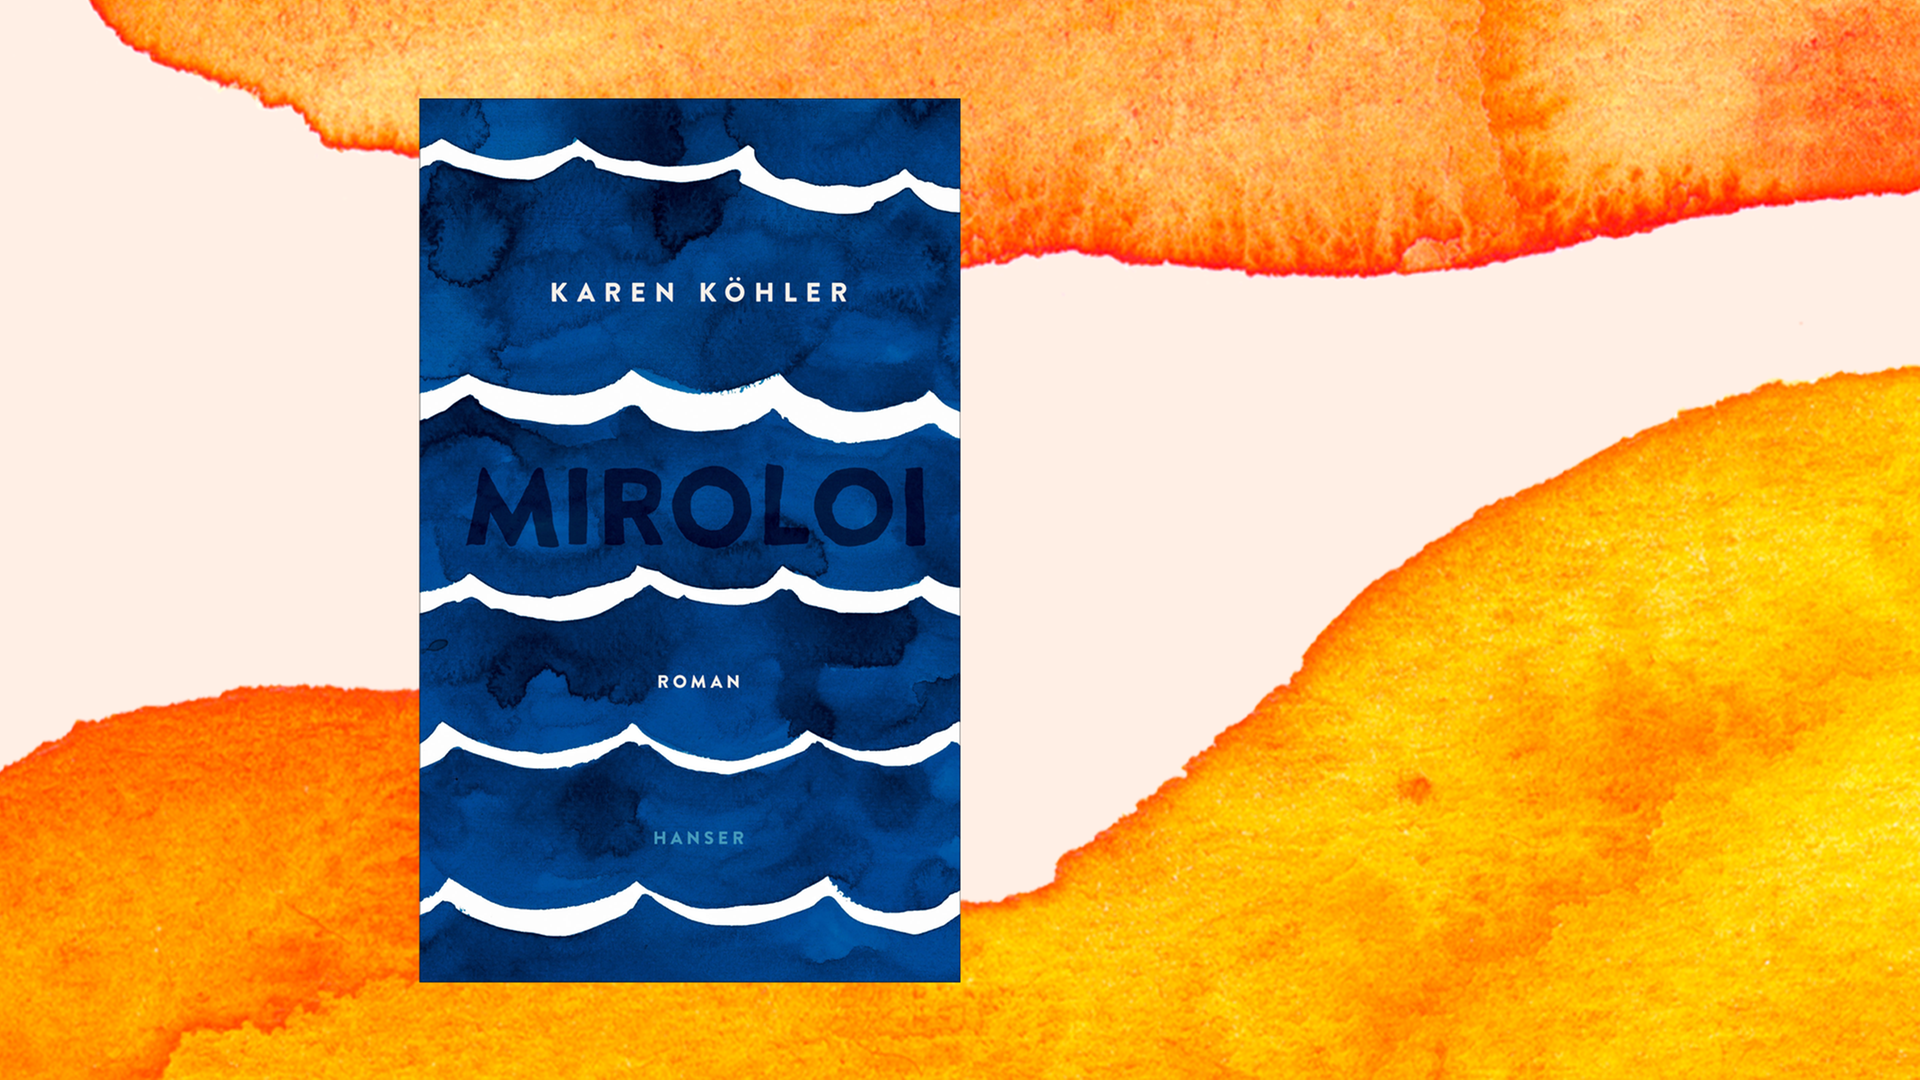 Das Cover des Buches "Miroloi" von Karen Köhler.